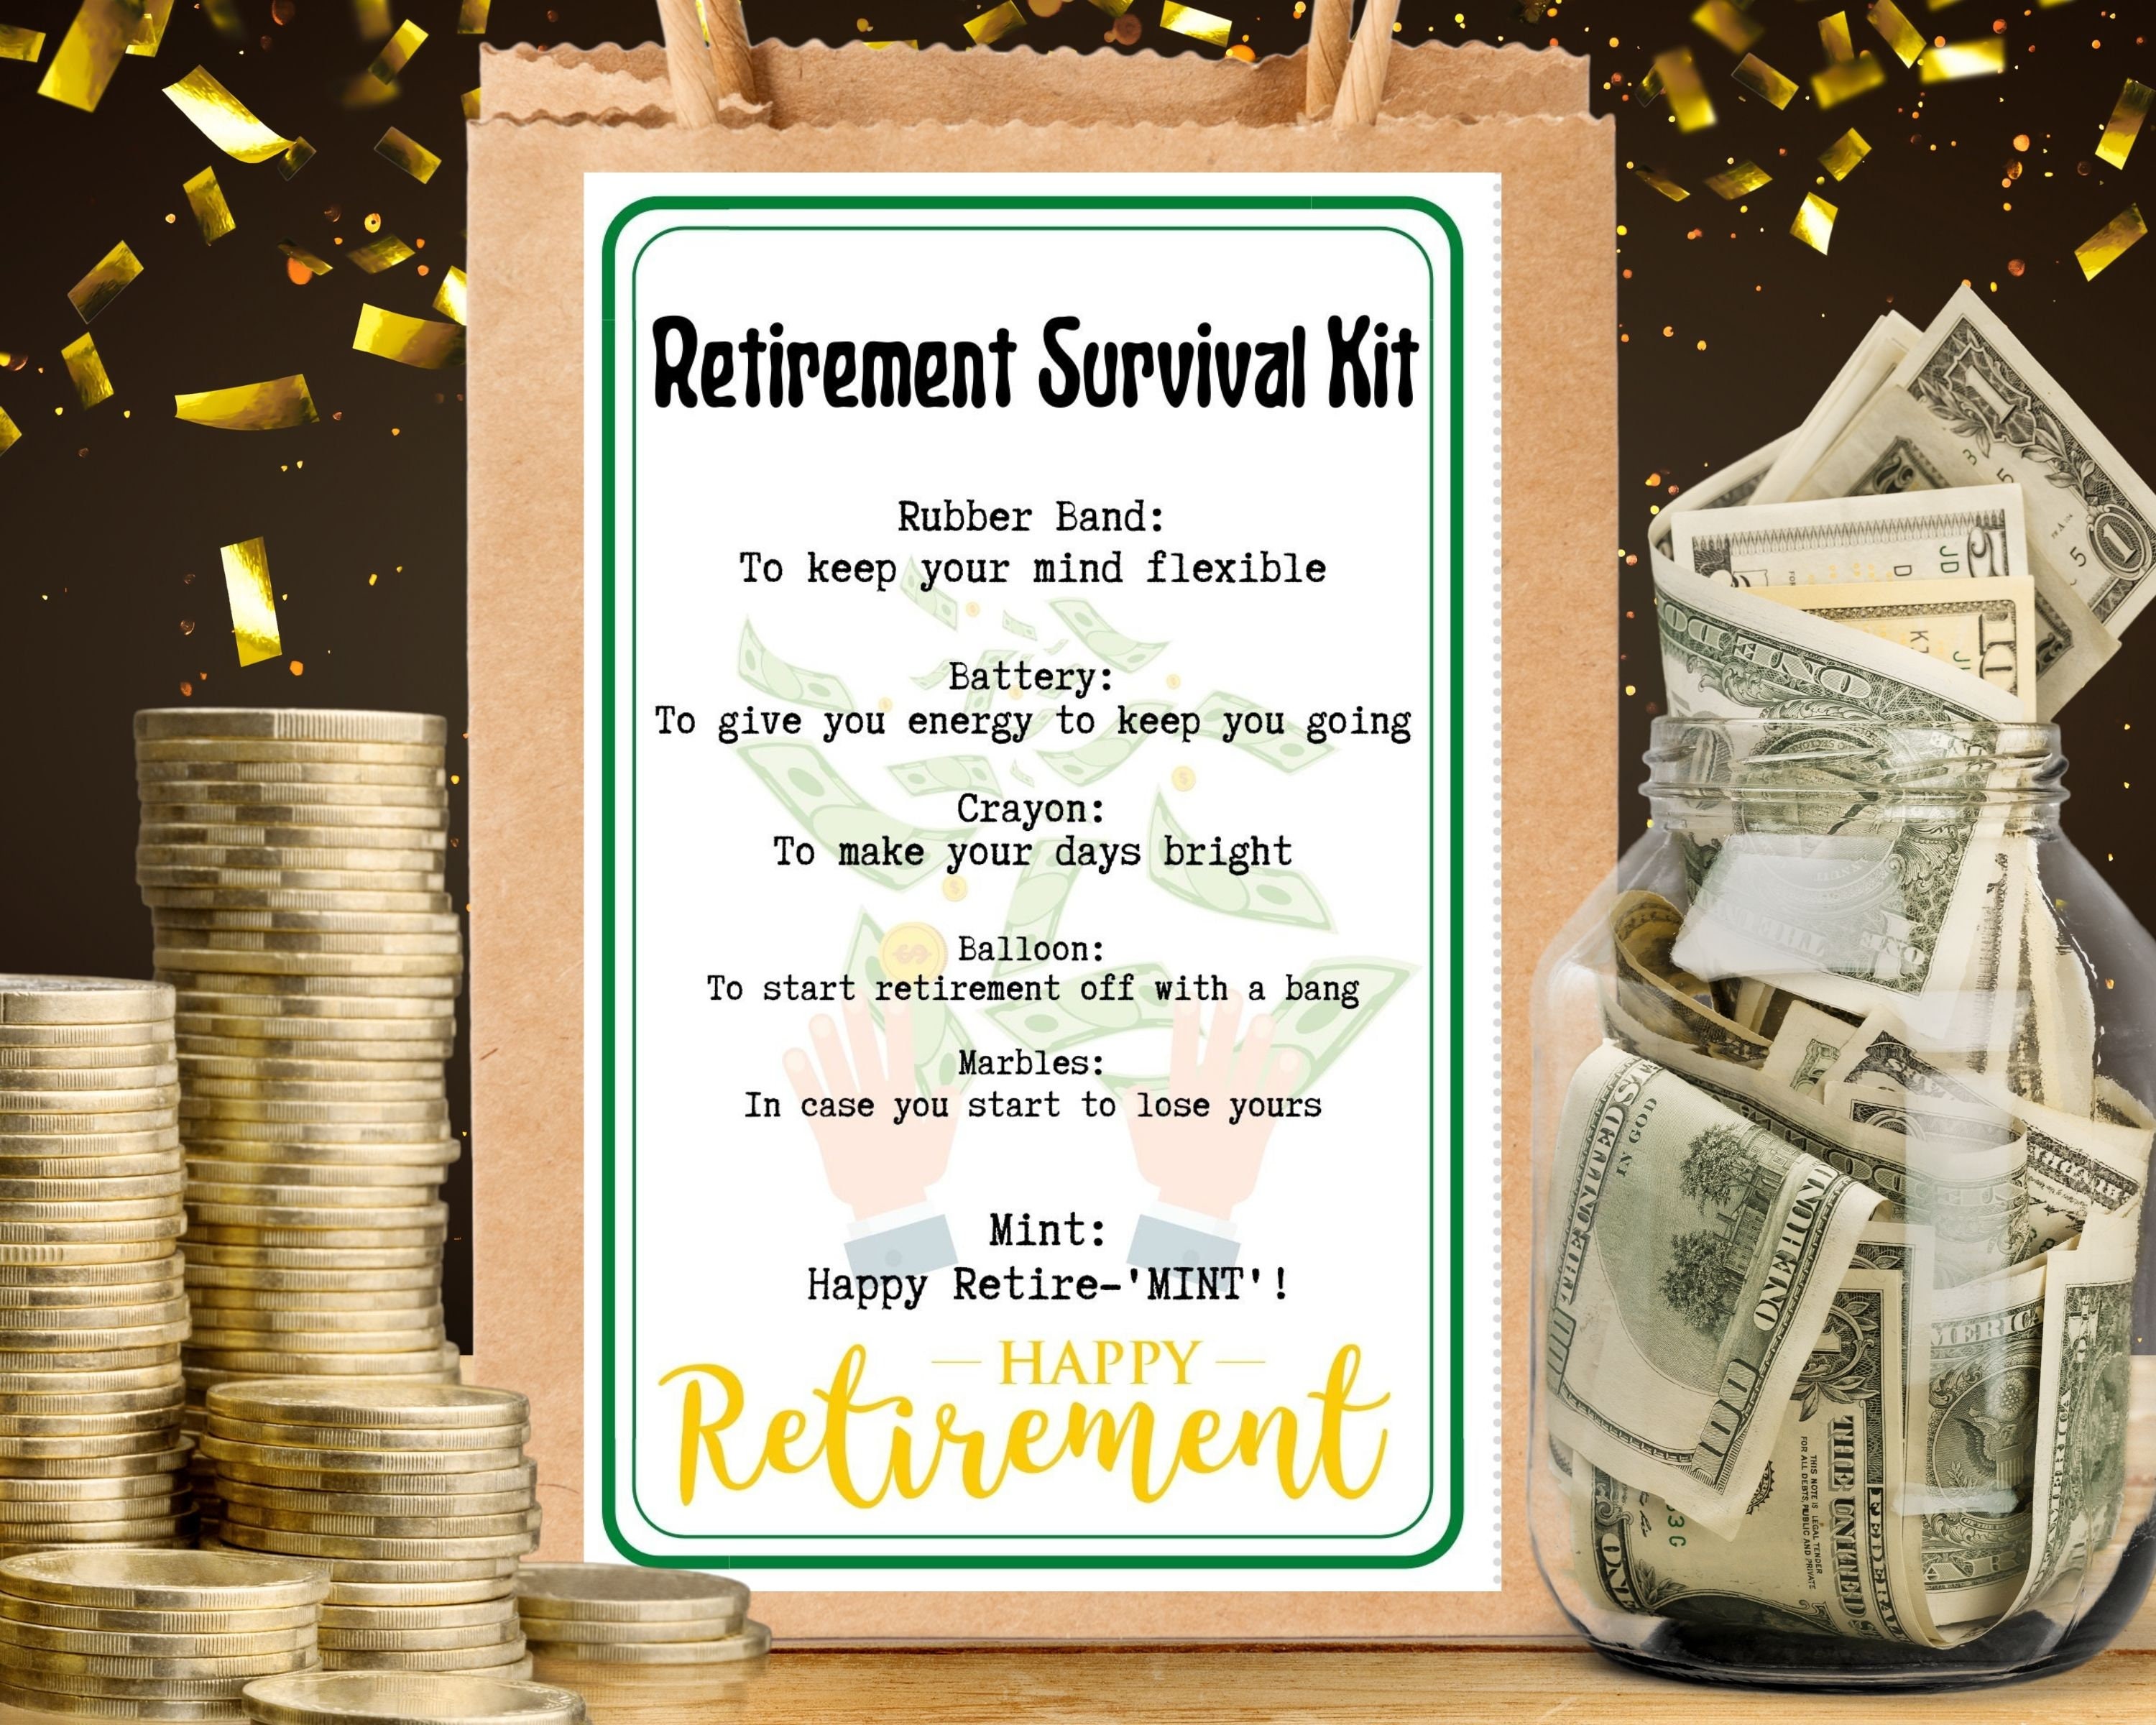 Retirement Survival Kit Novelty Officially Retired Funny Gag Gift Set Toy Game